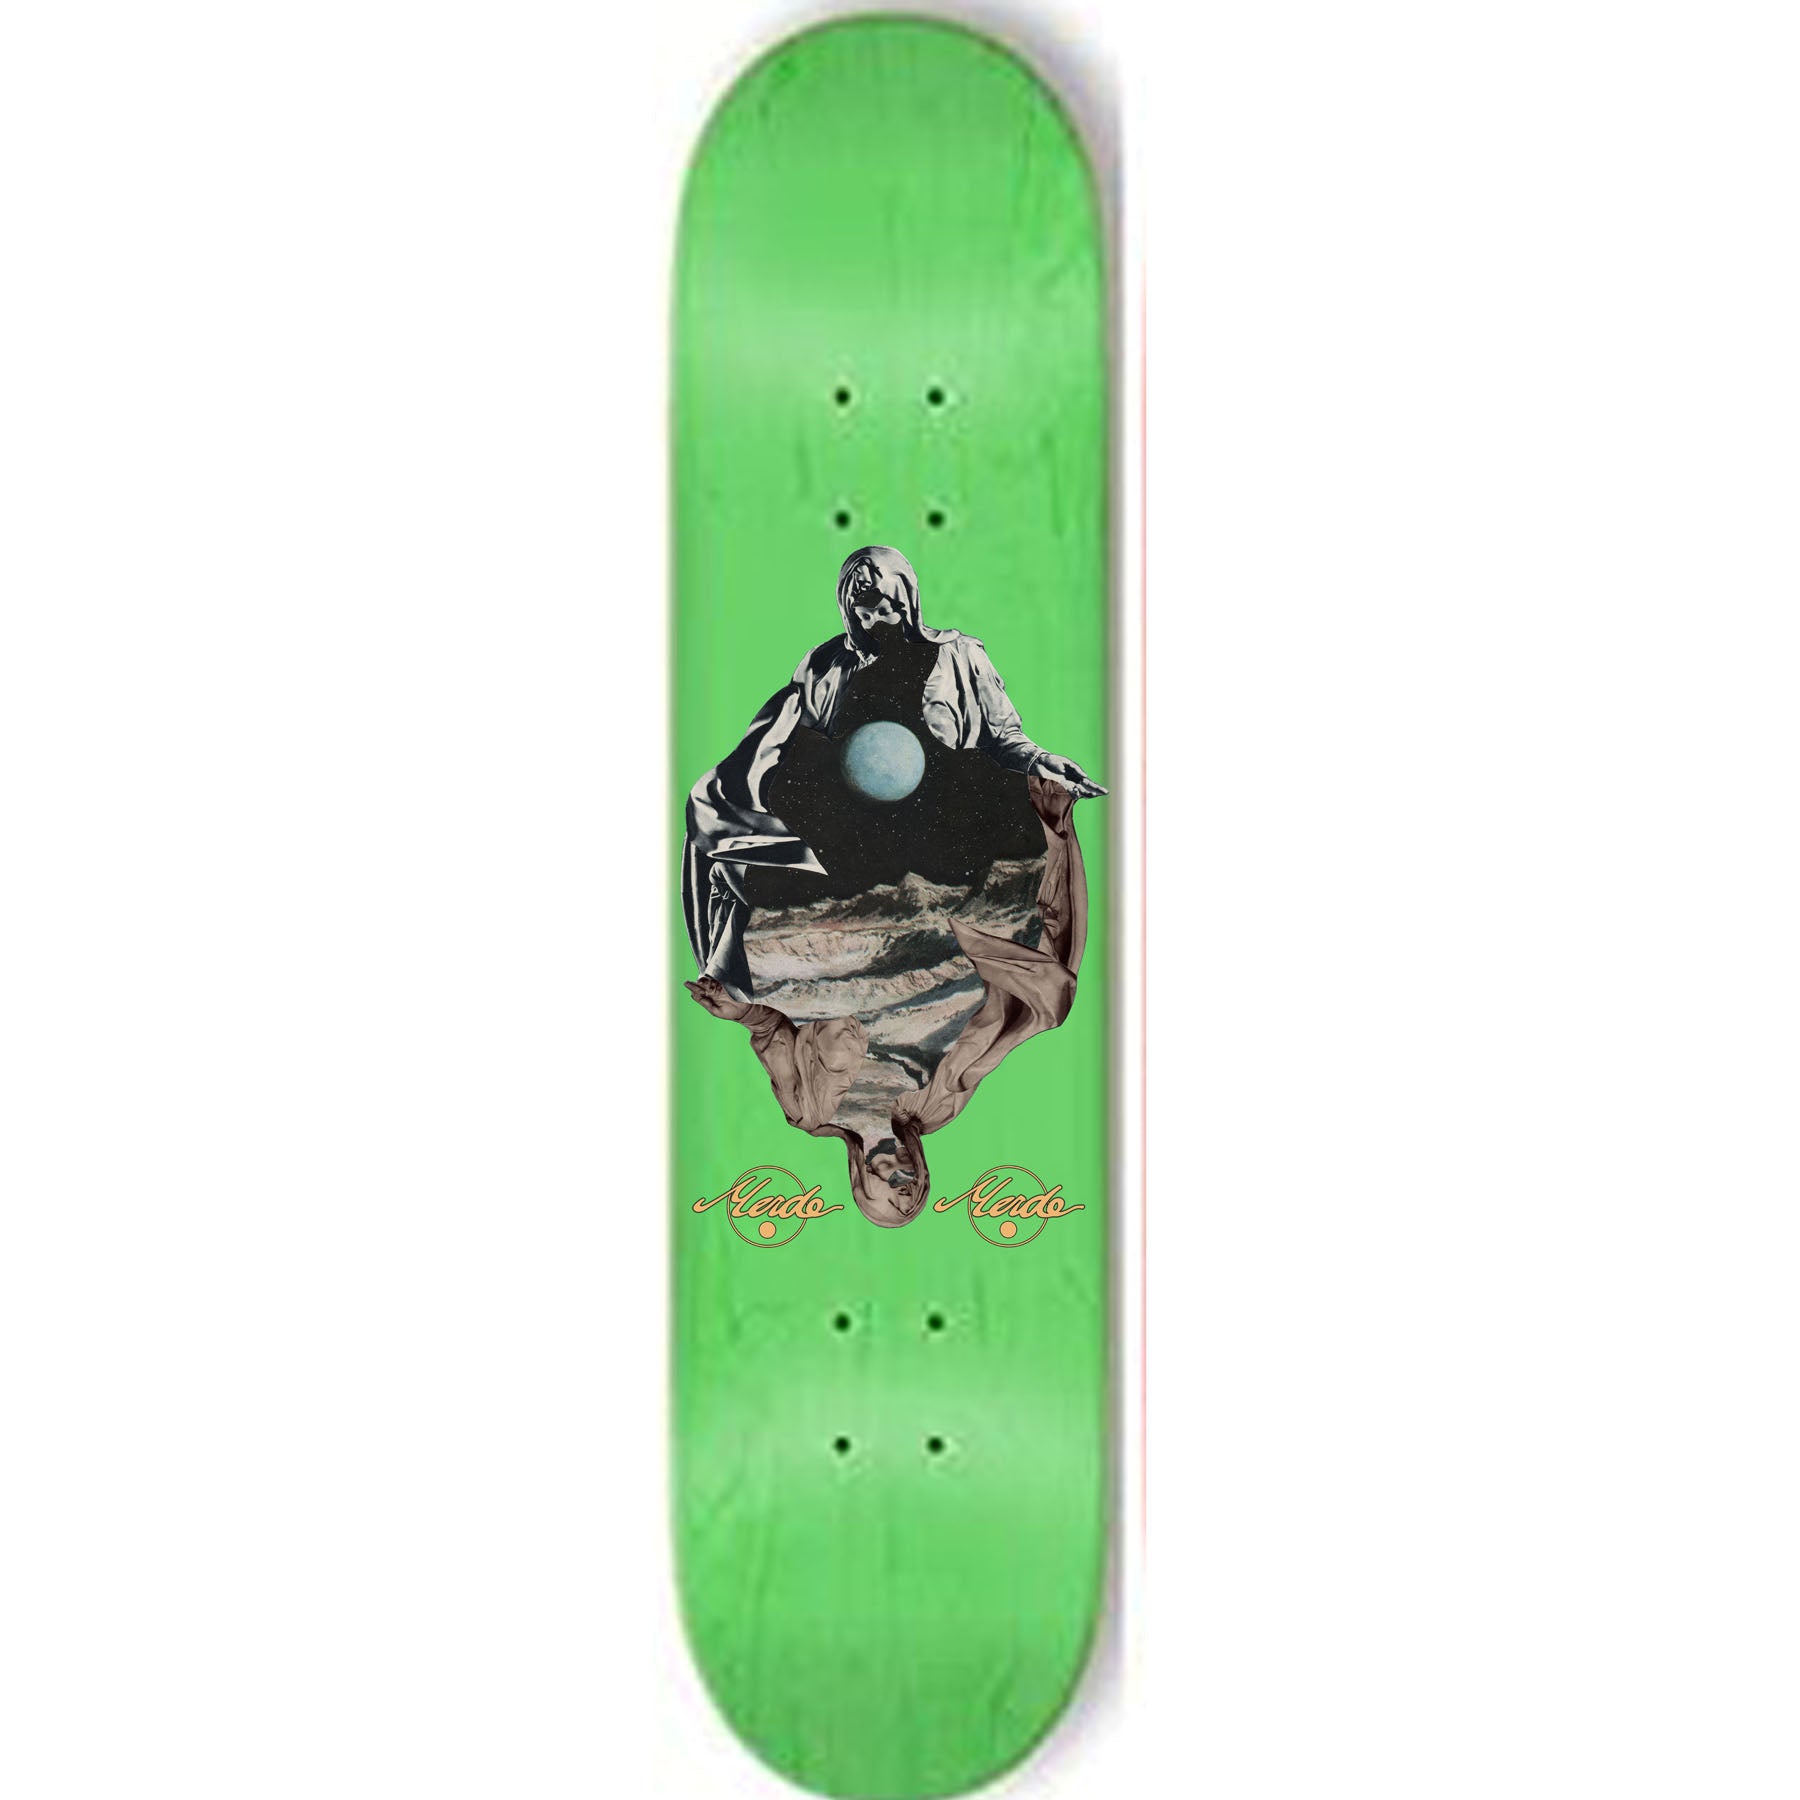 Merde Skateboards "Ryan Casado- A Shunned Moon- Ojerum" Assorted Sized Deck